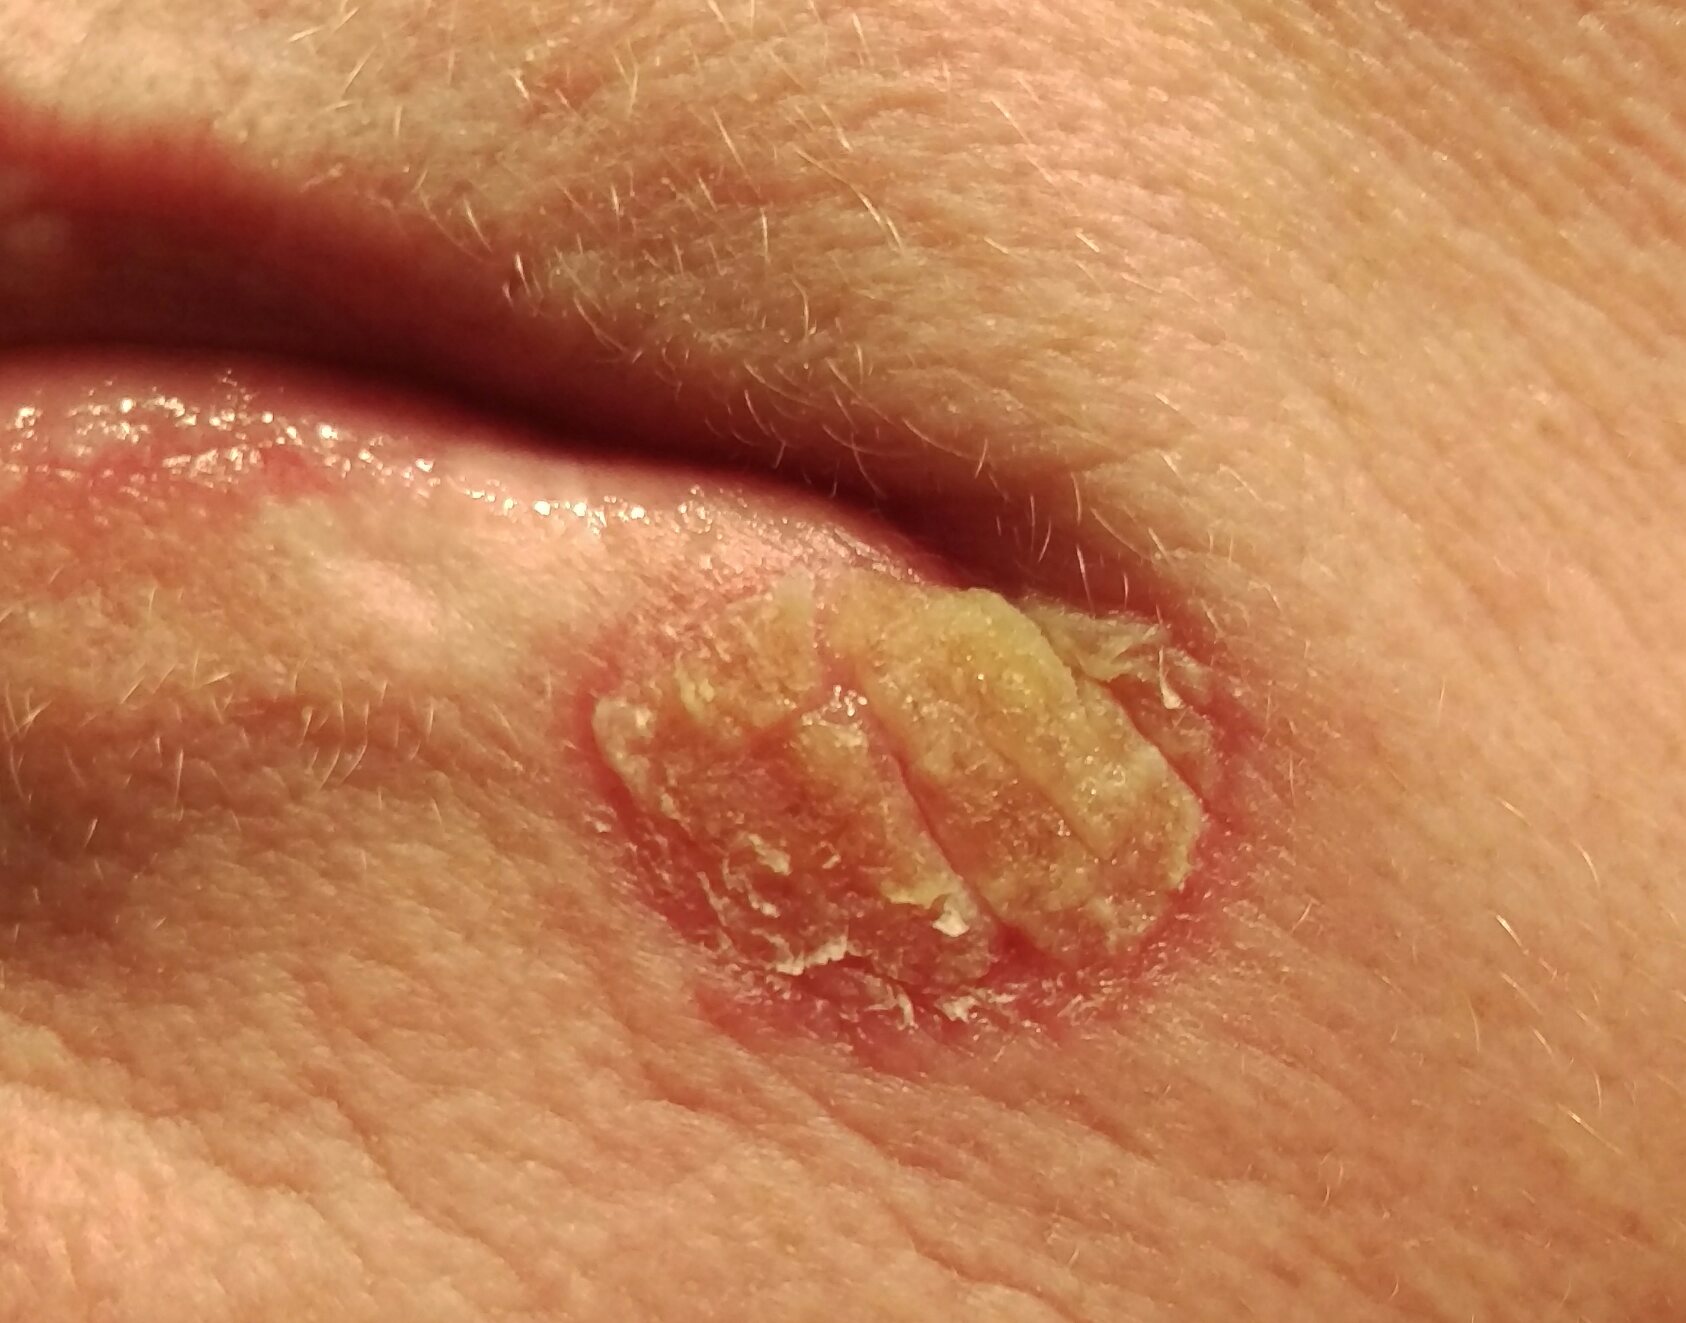 Cracking lip after Efudex treatment